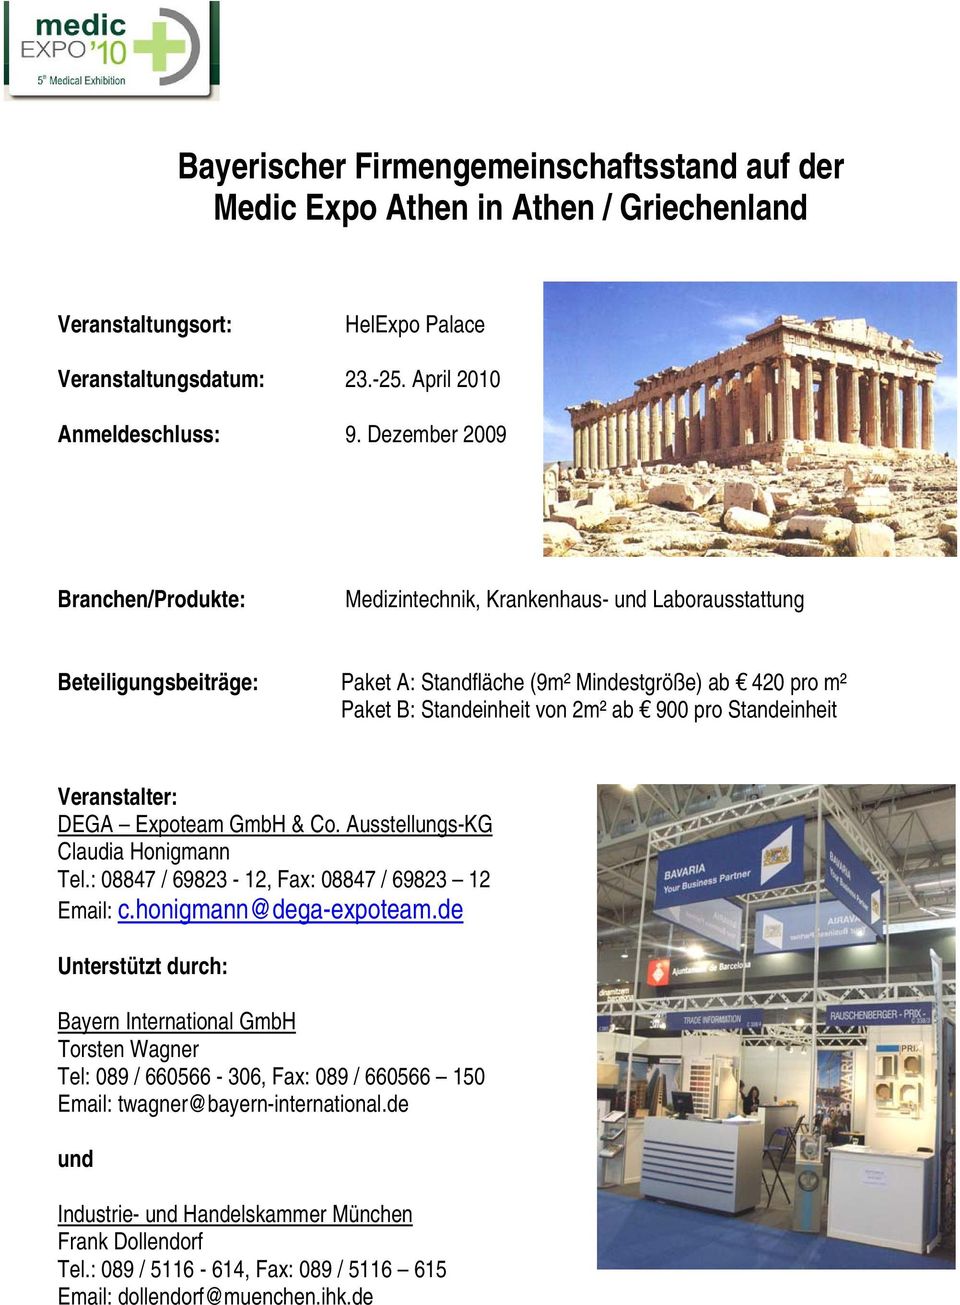 Standeinheit Veranstalter: DEGA Expoteam GmbH & Co. Ausstellungs-KG Claudia Honigmann Tel.: 08847 / 69823-12, Fax: 08847 / 69823 12 Email: c.honigmann@dega-expoteam.